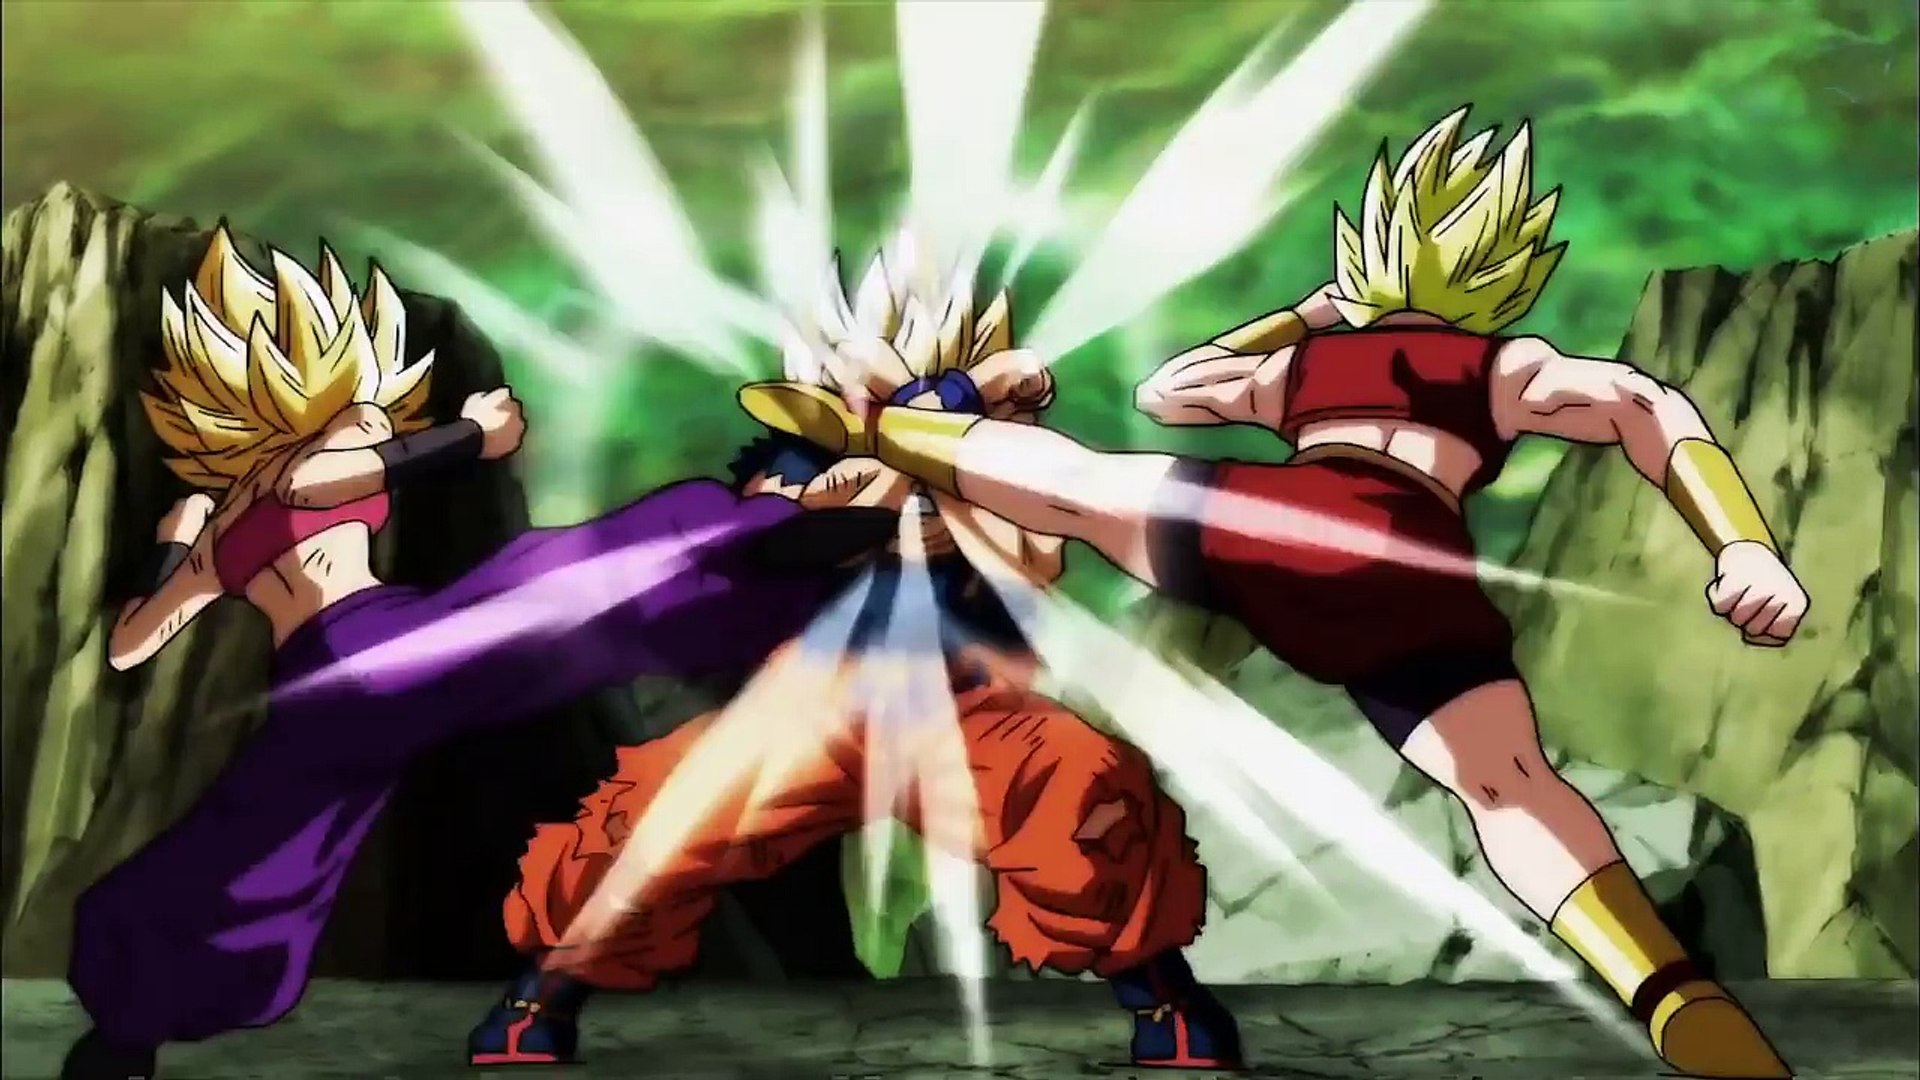 Kale and Caulifla vs Goku (English Subbed) - Dragon Ball Super Episode 113  4K HD - Video Dailymotion